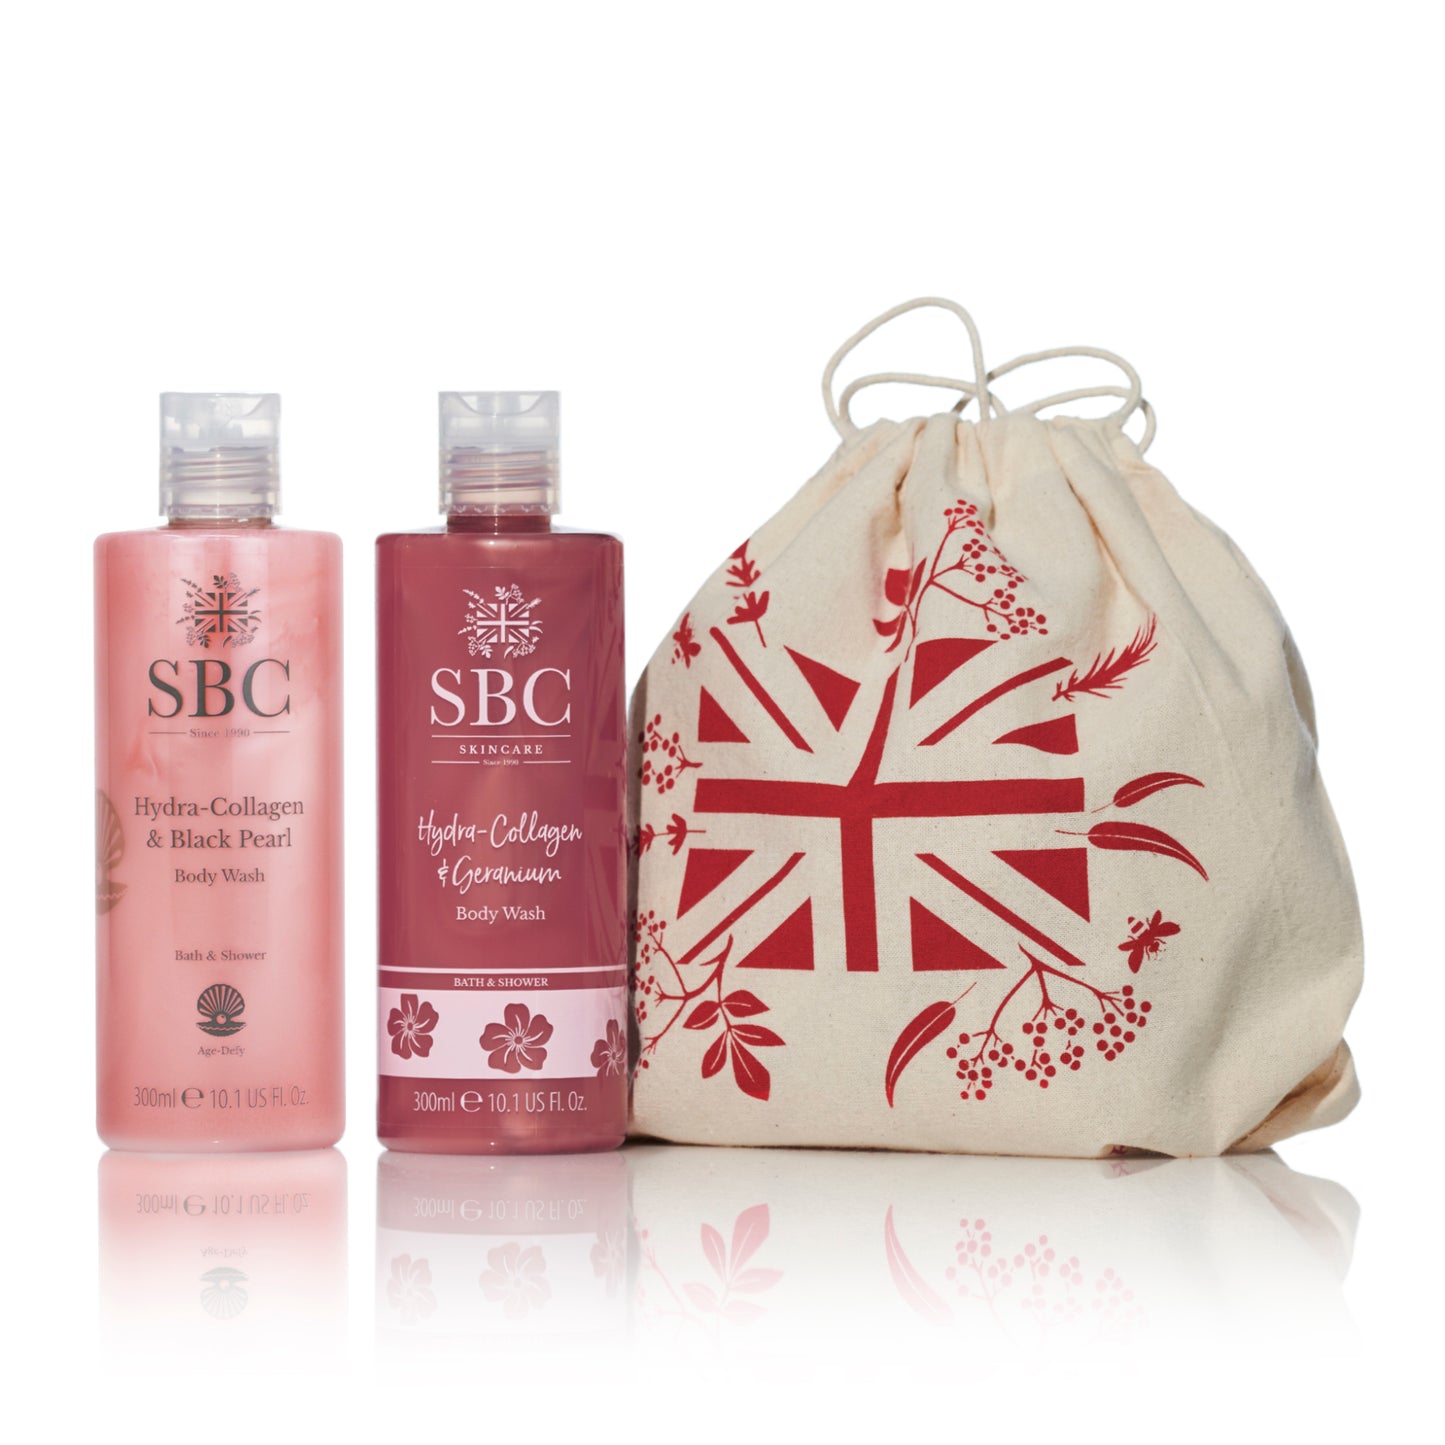 SBC's Sweet & Sensual Body Wash Gift Set on a white background